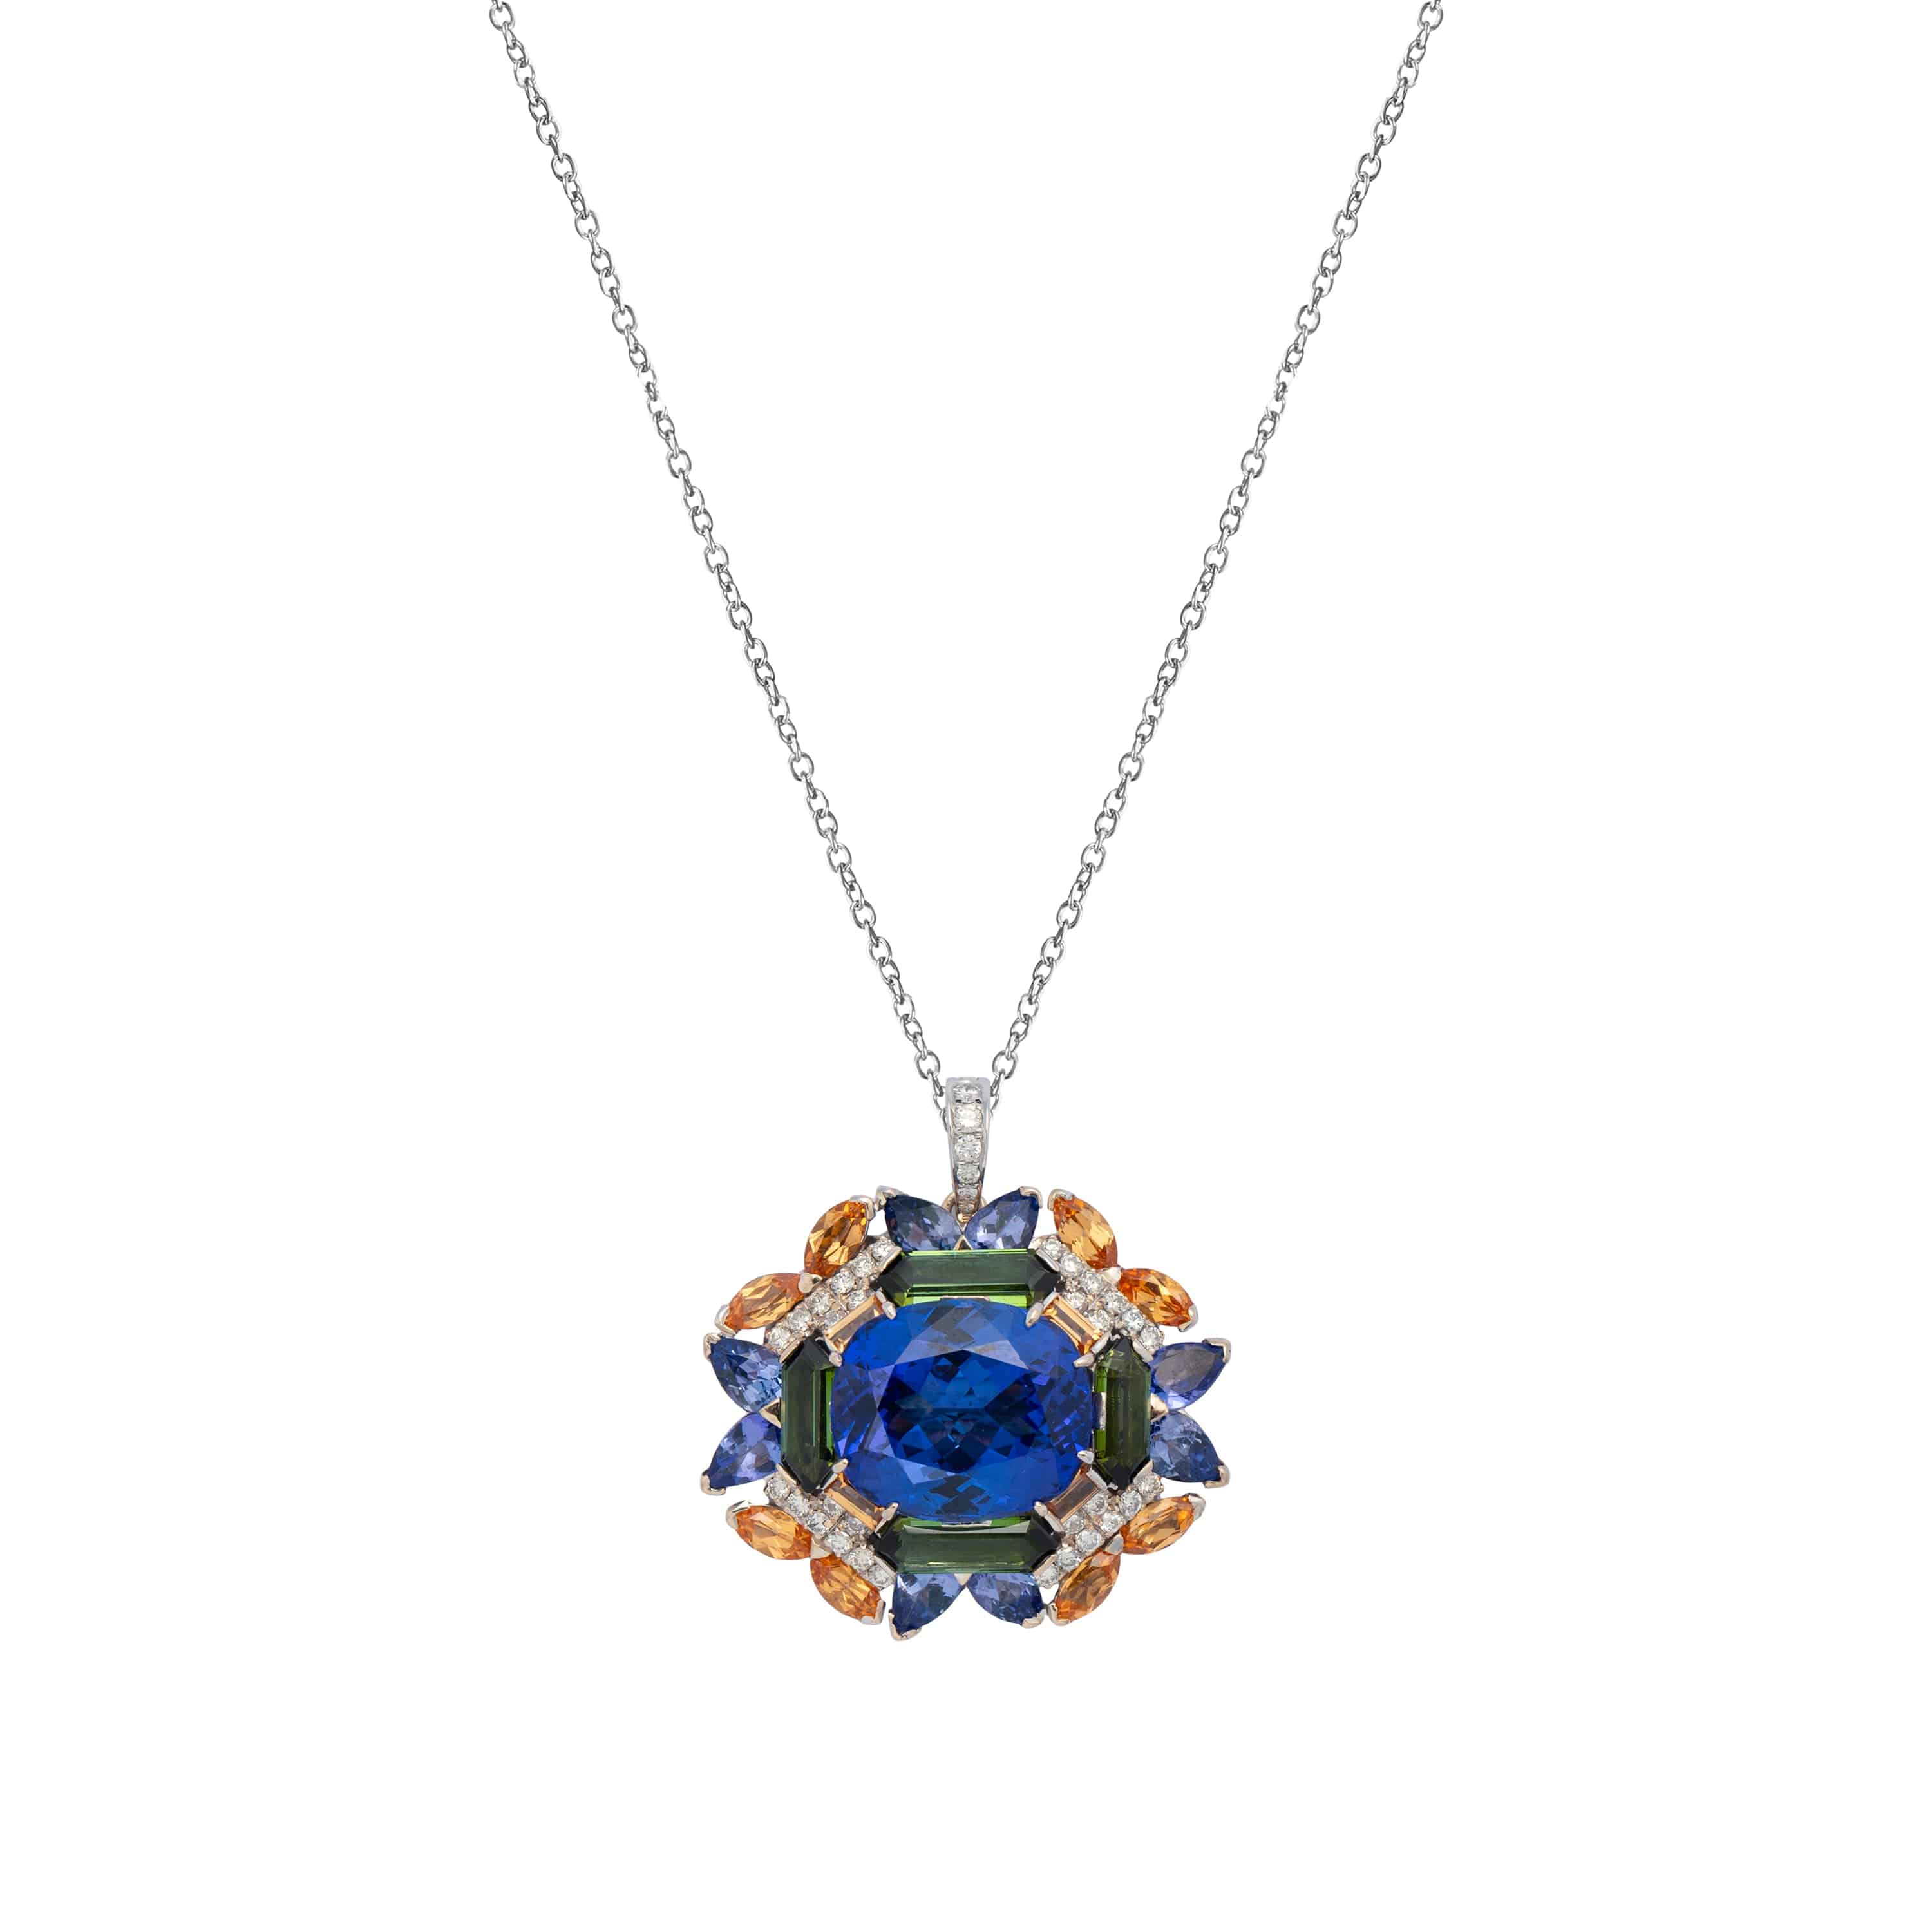 transformational-tanzanite-emerald-diamond-necklace-ring-pendant-43710323753124.jpg